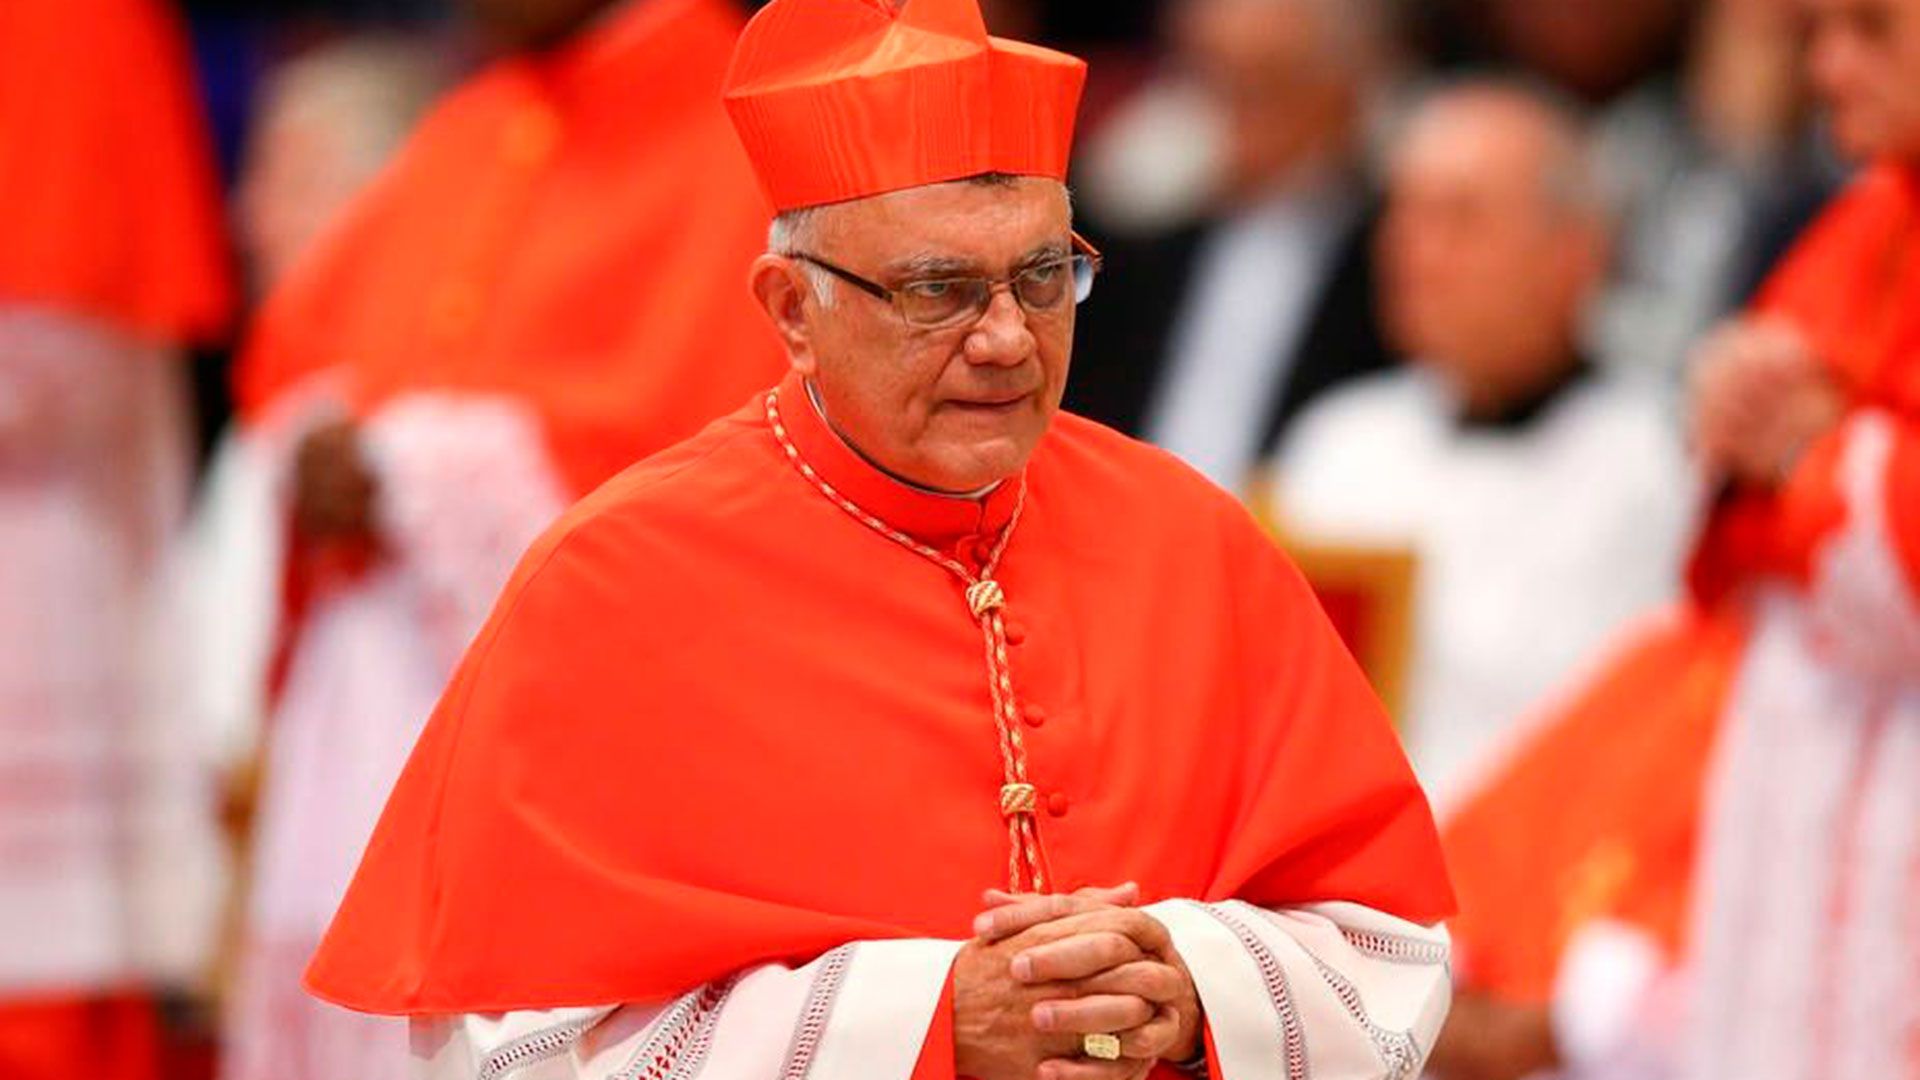 Cardenal Baltazar Porras: La degradación moral en Venezuela